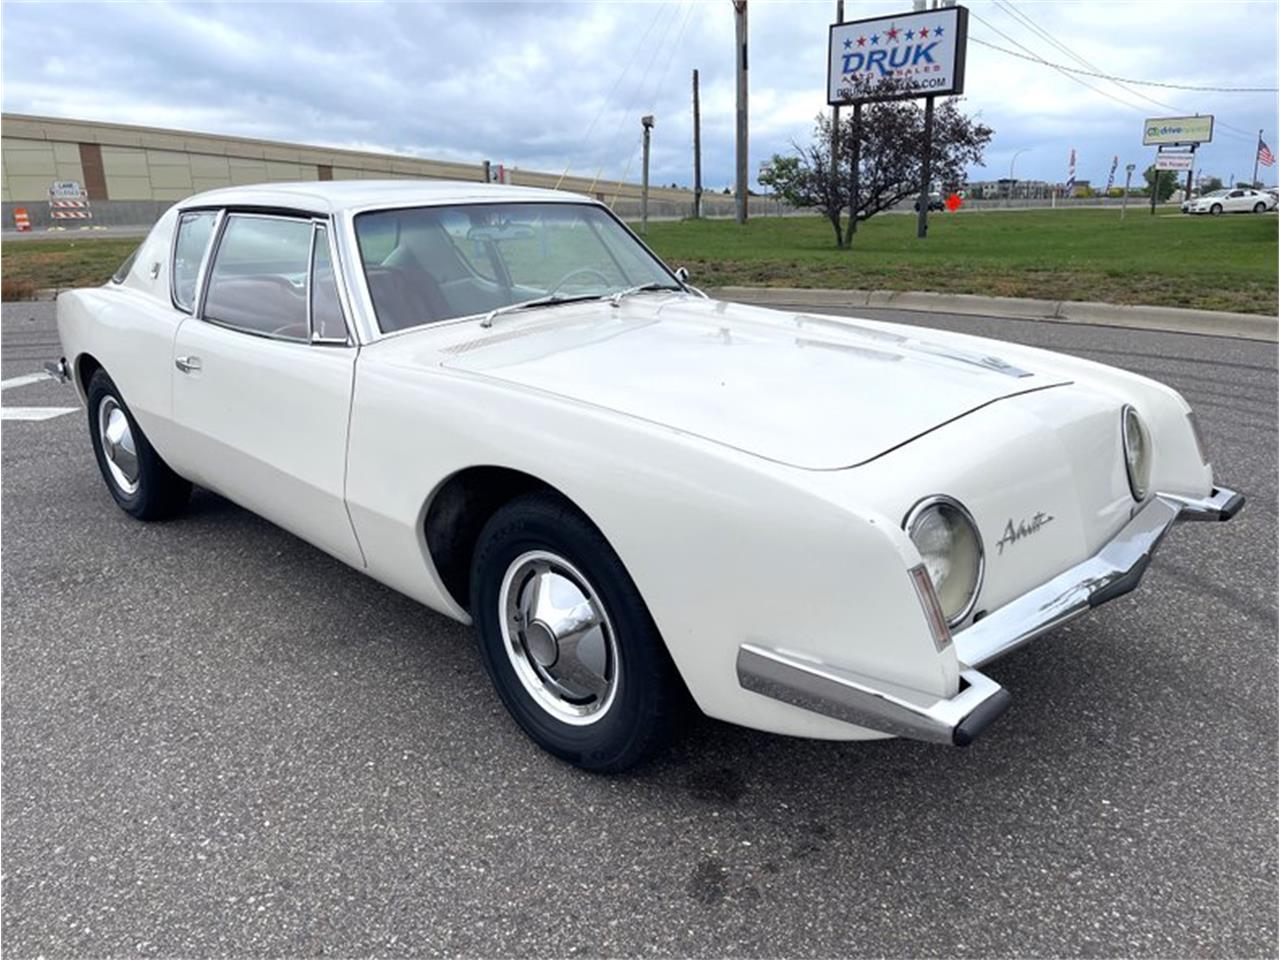 For Sale: 1963 Studebaker Avanti in Ramsey, Minnesota for sale in Anoka, MN